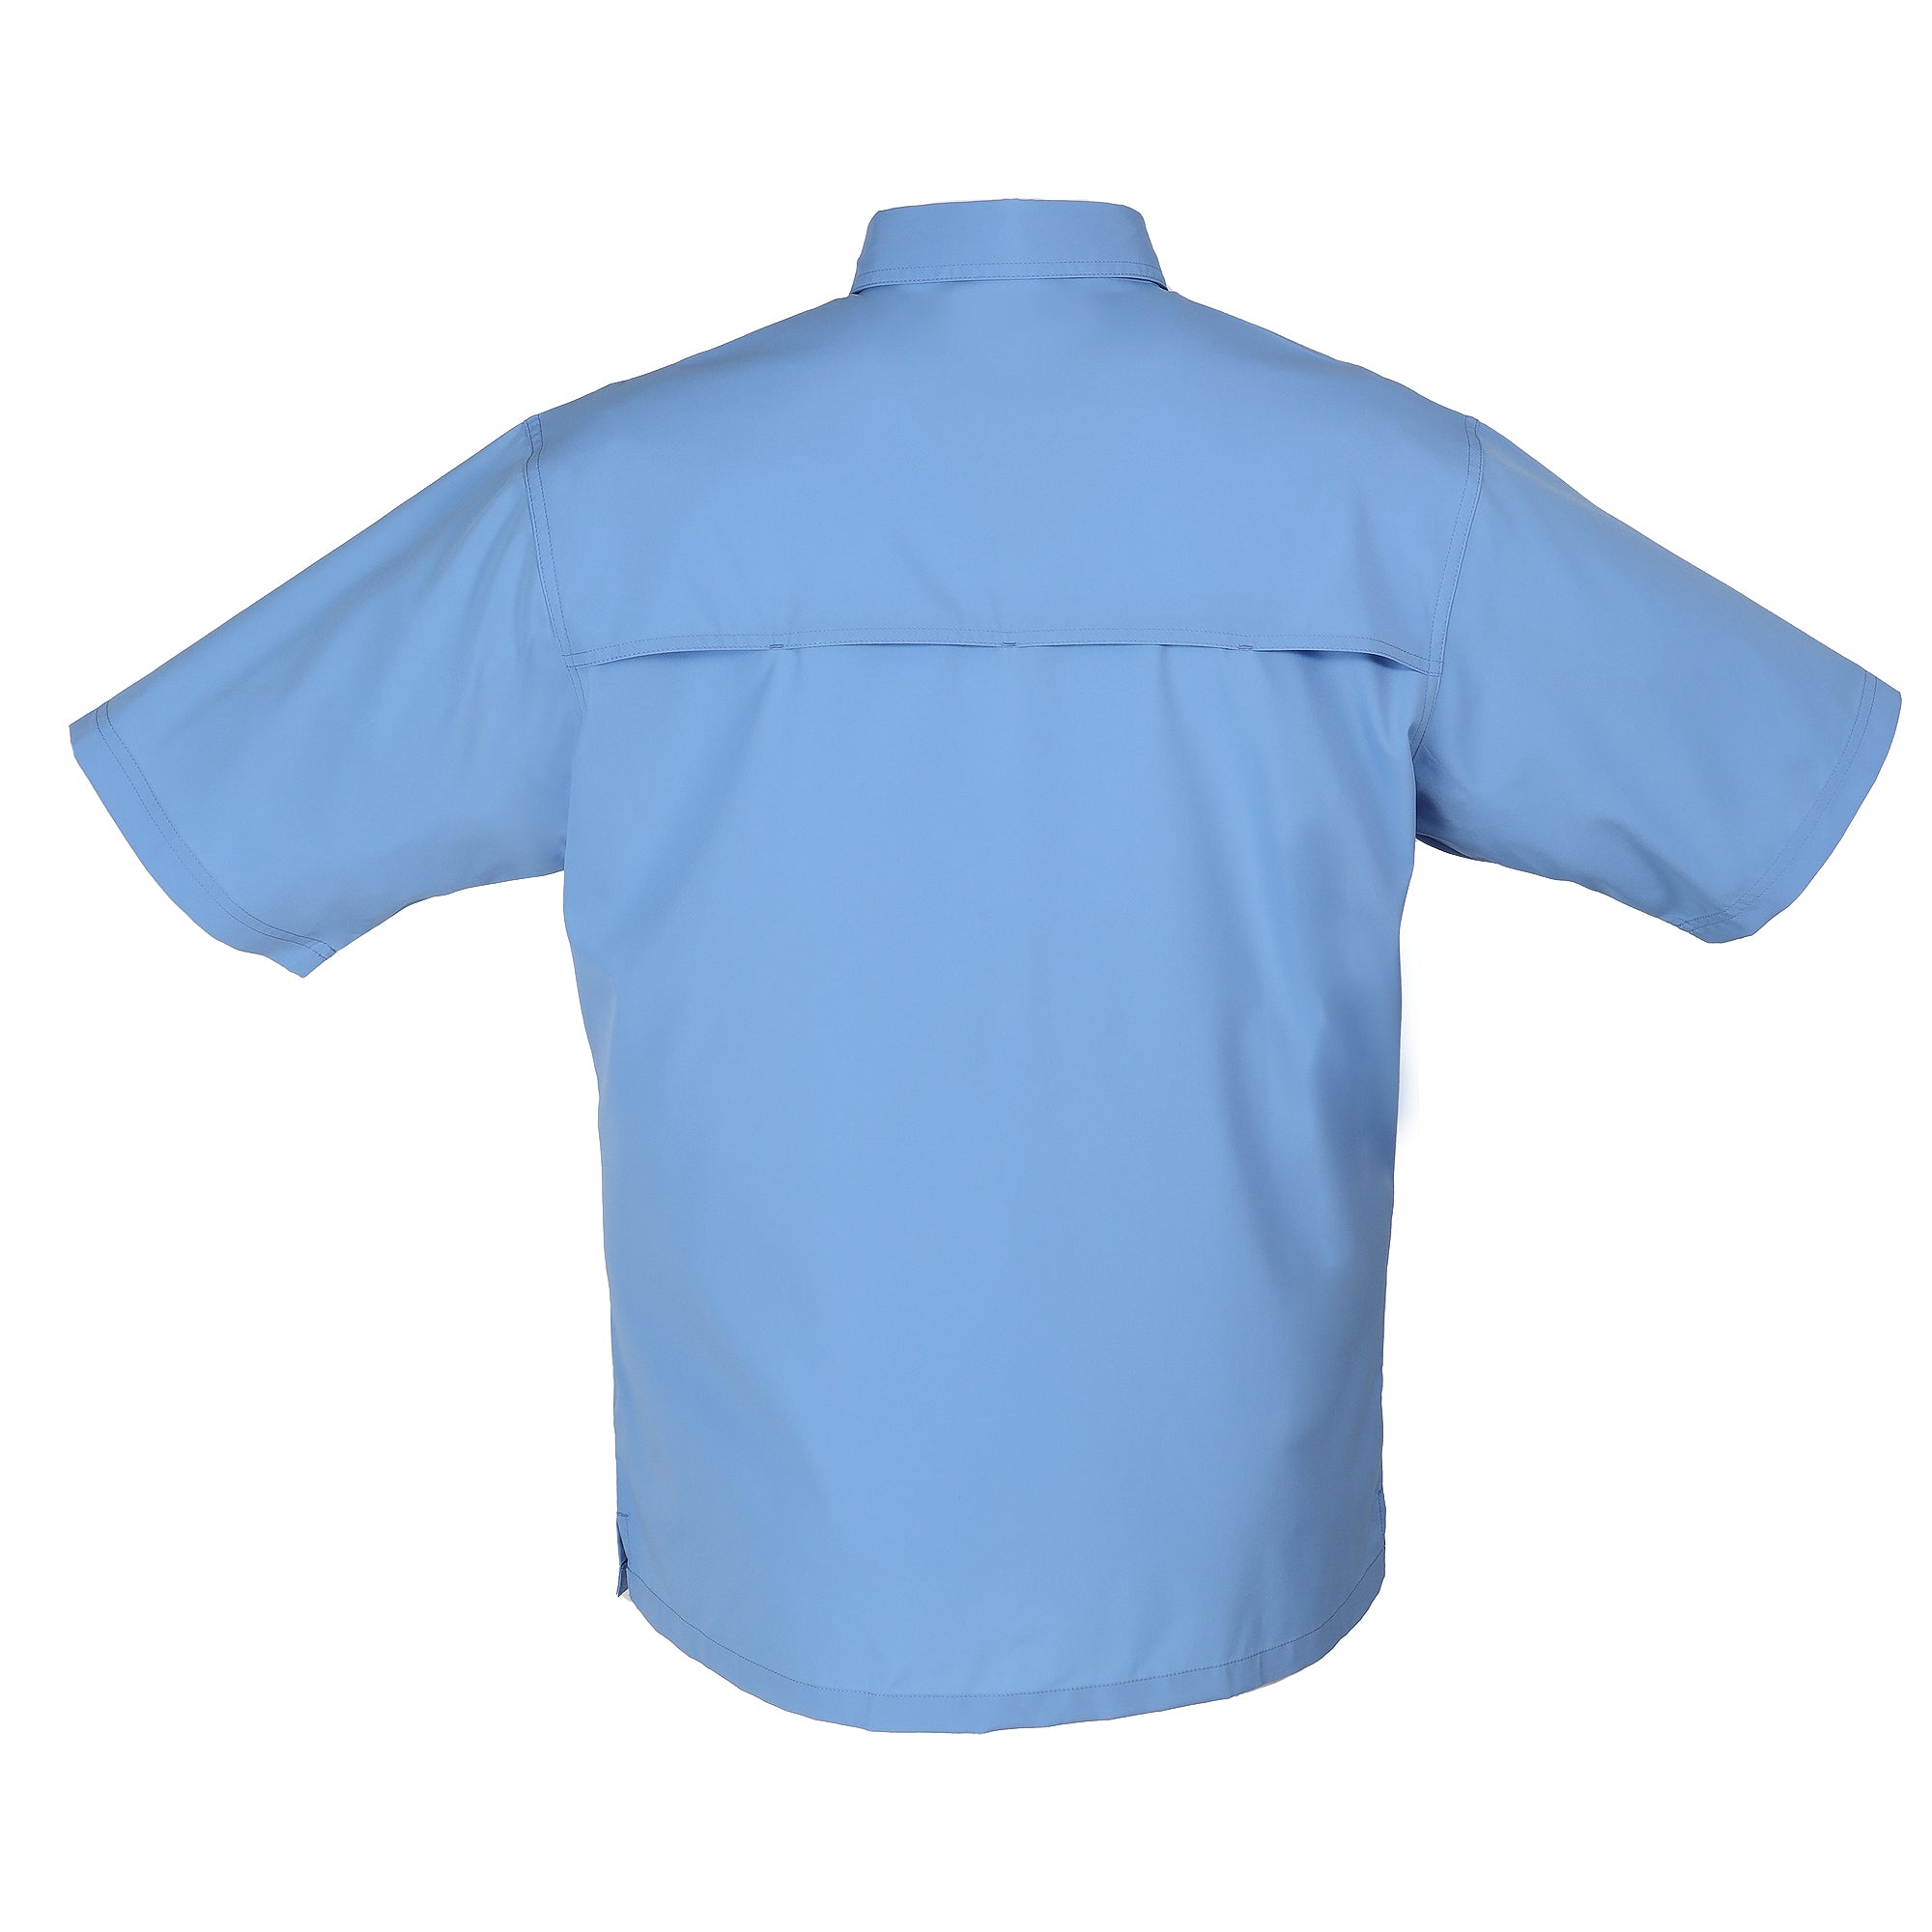 Key West Men's Short Sleeve Shirt Featuring BloodGuard Plus